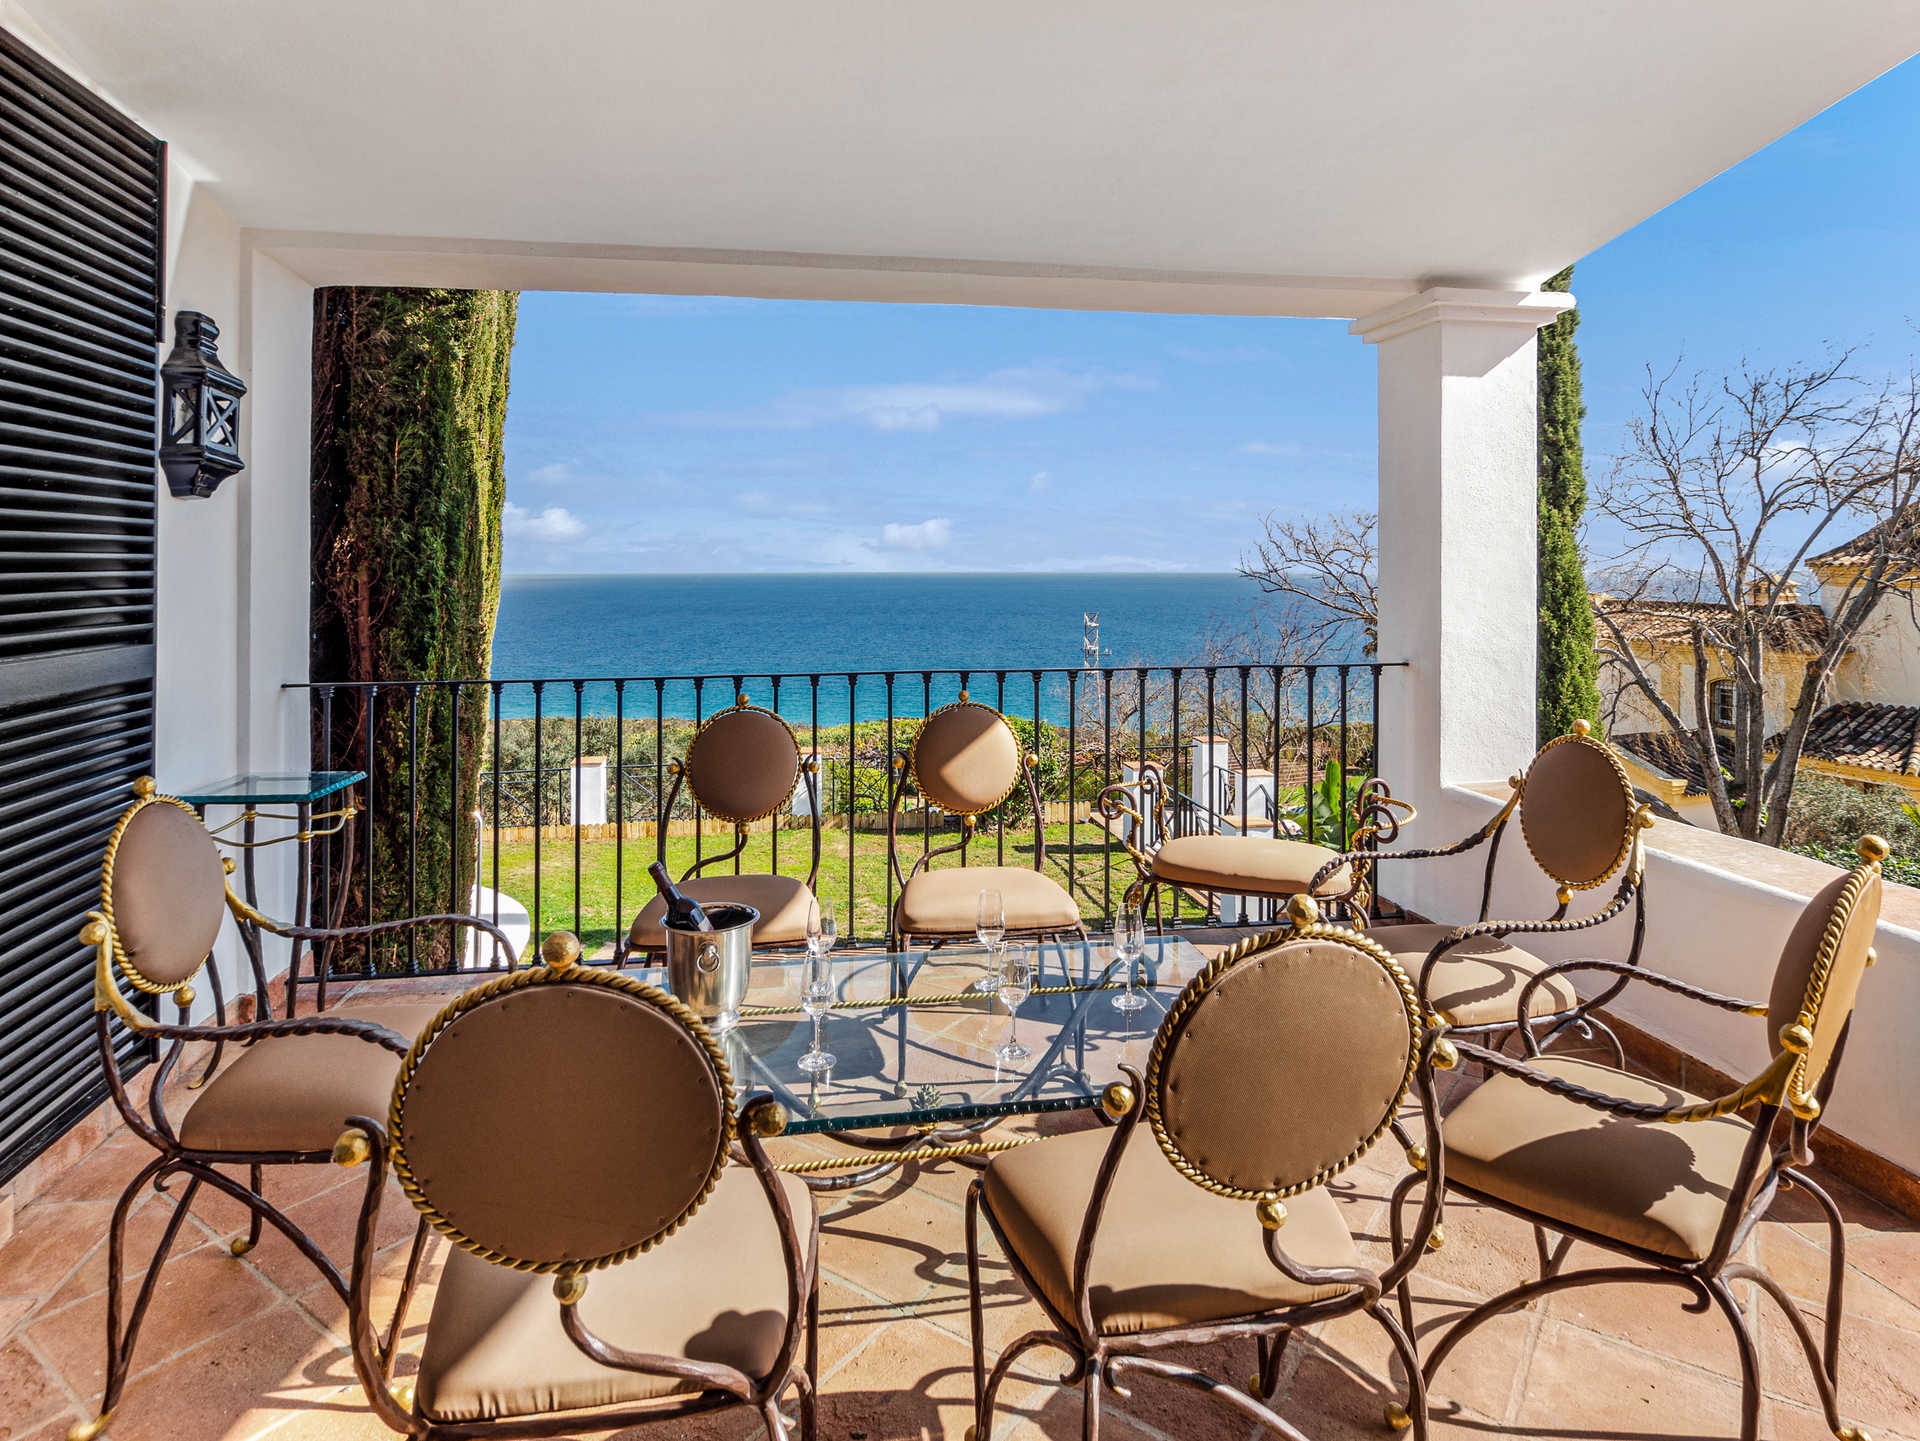 25% discount 2 weeks in luxury villa for summer